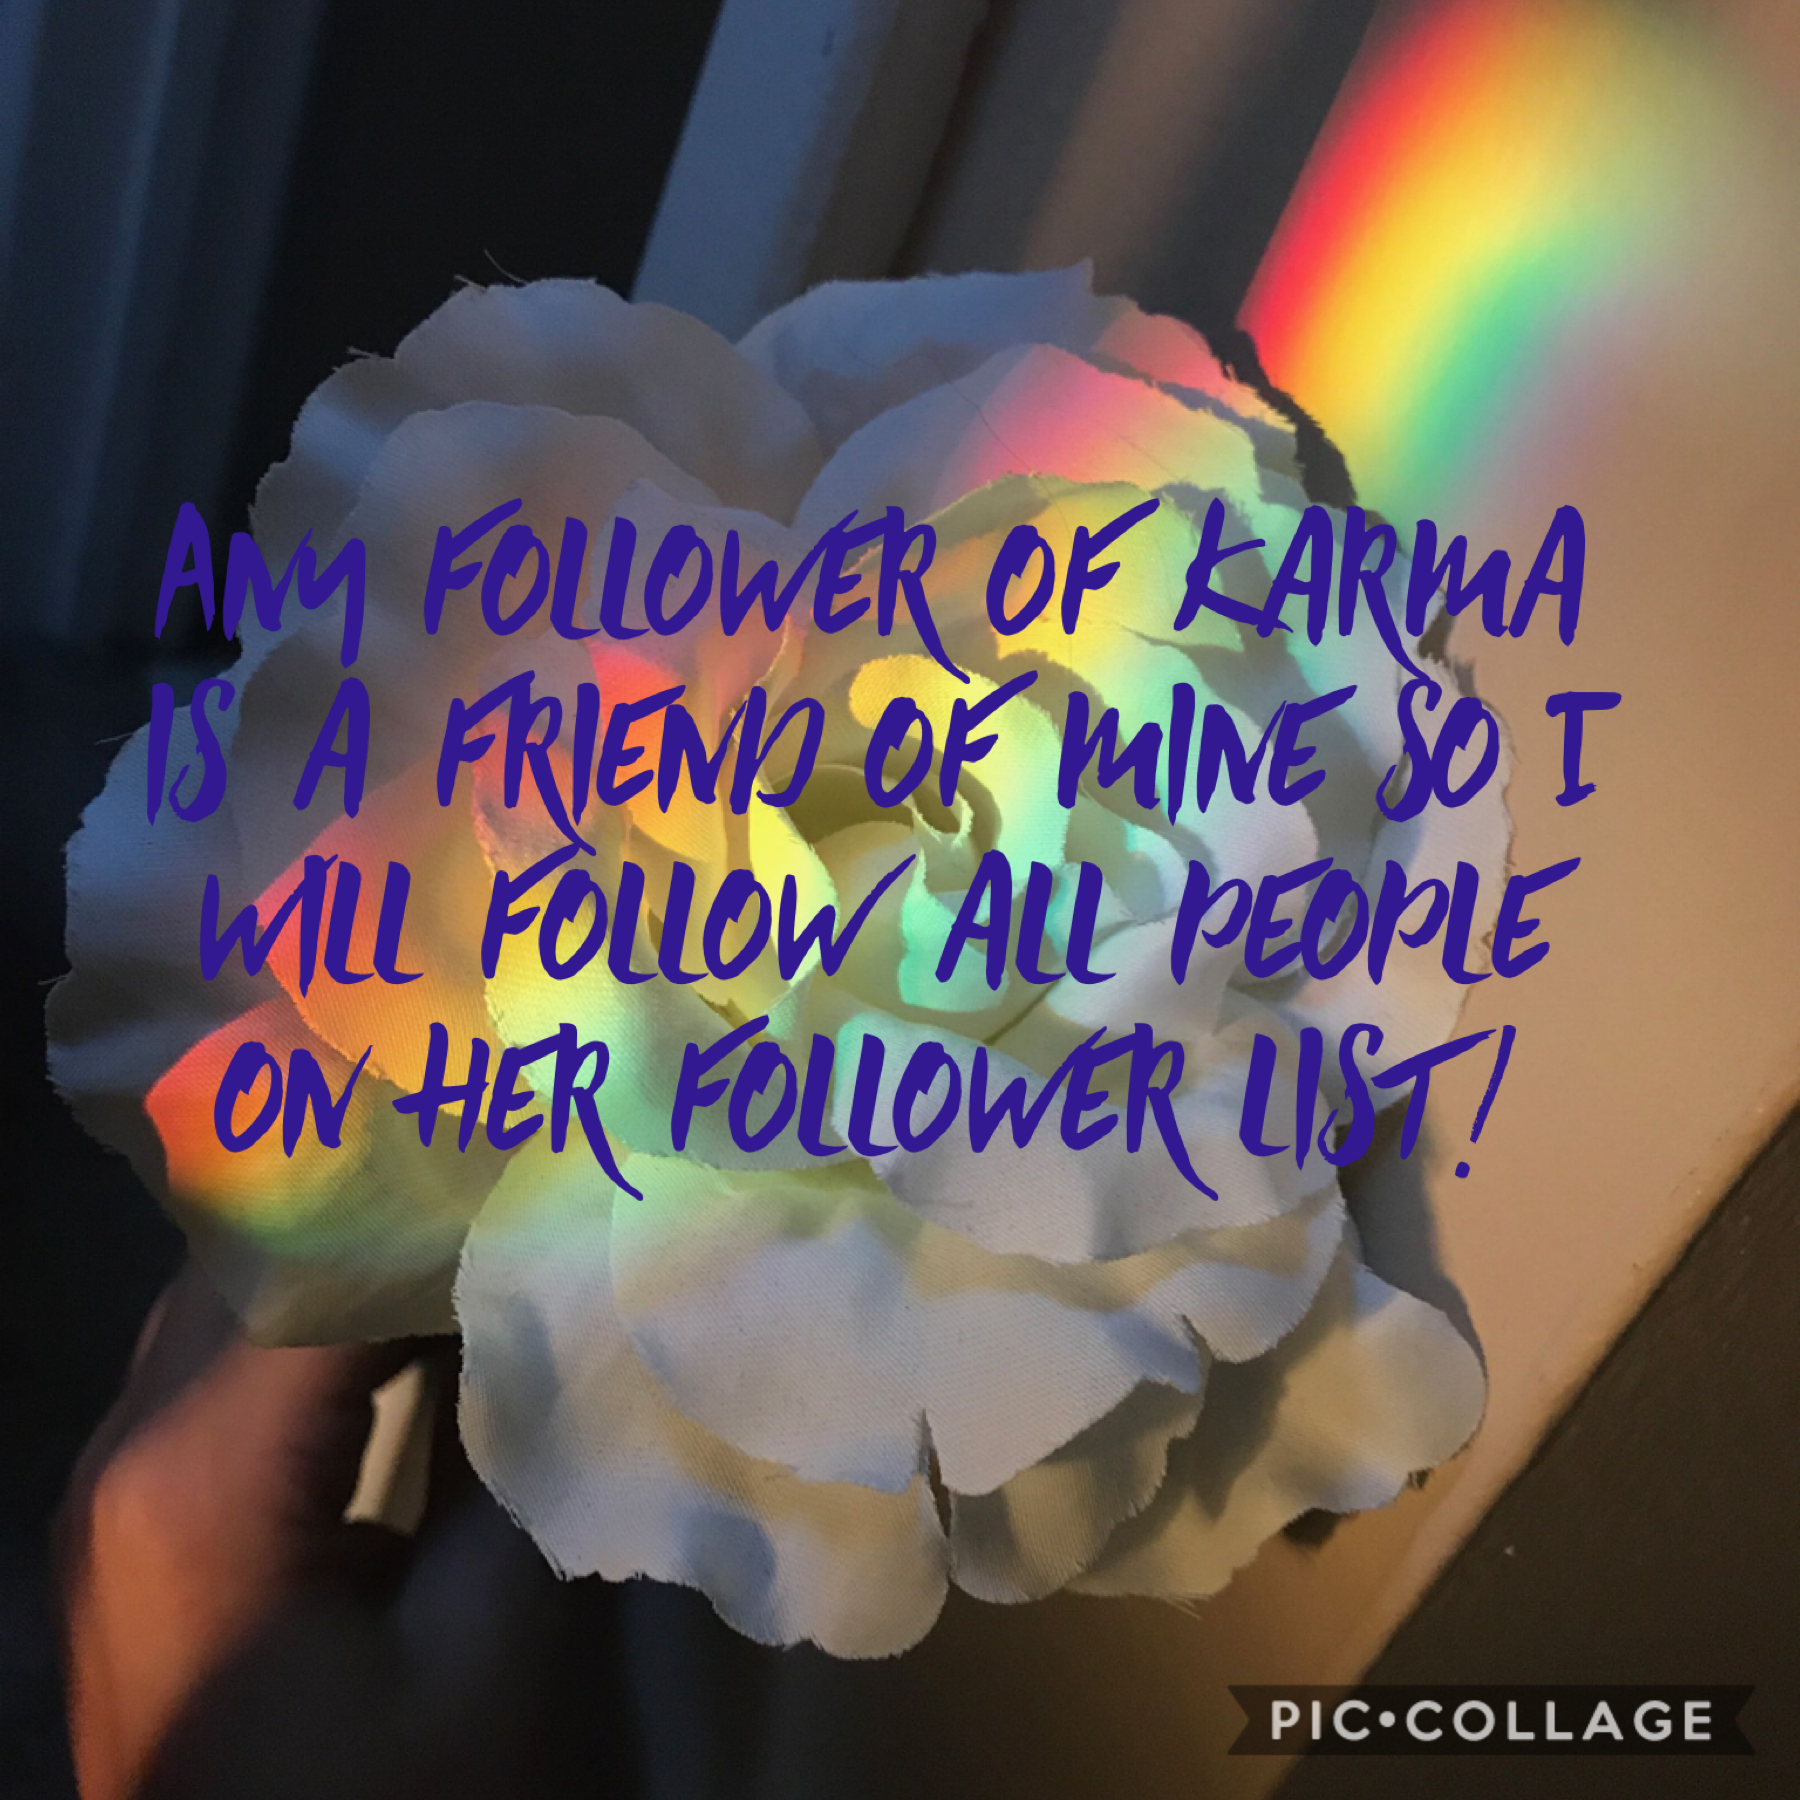 I will follow many people for Karma!